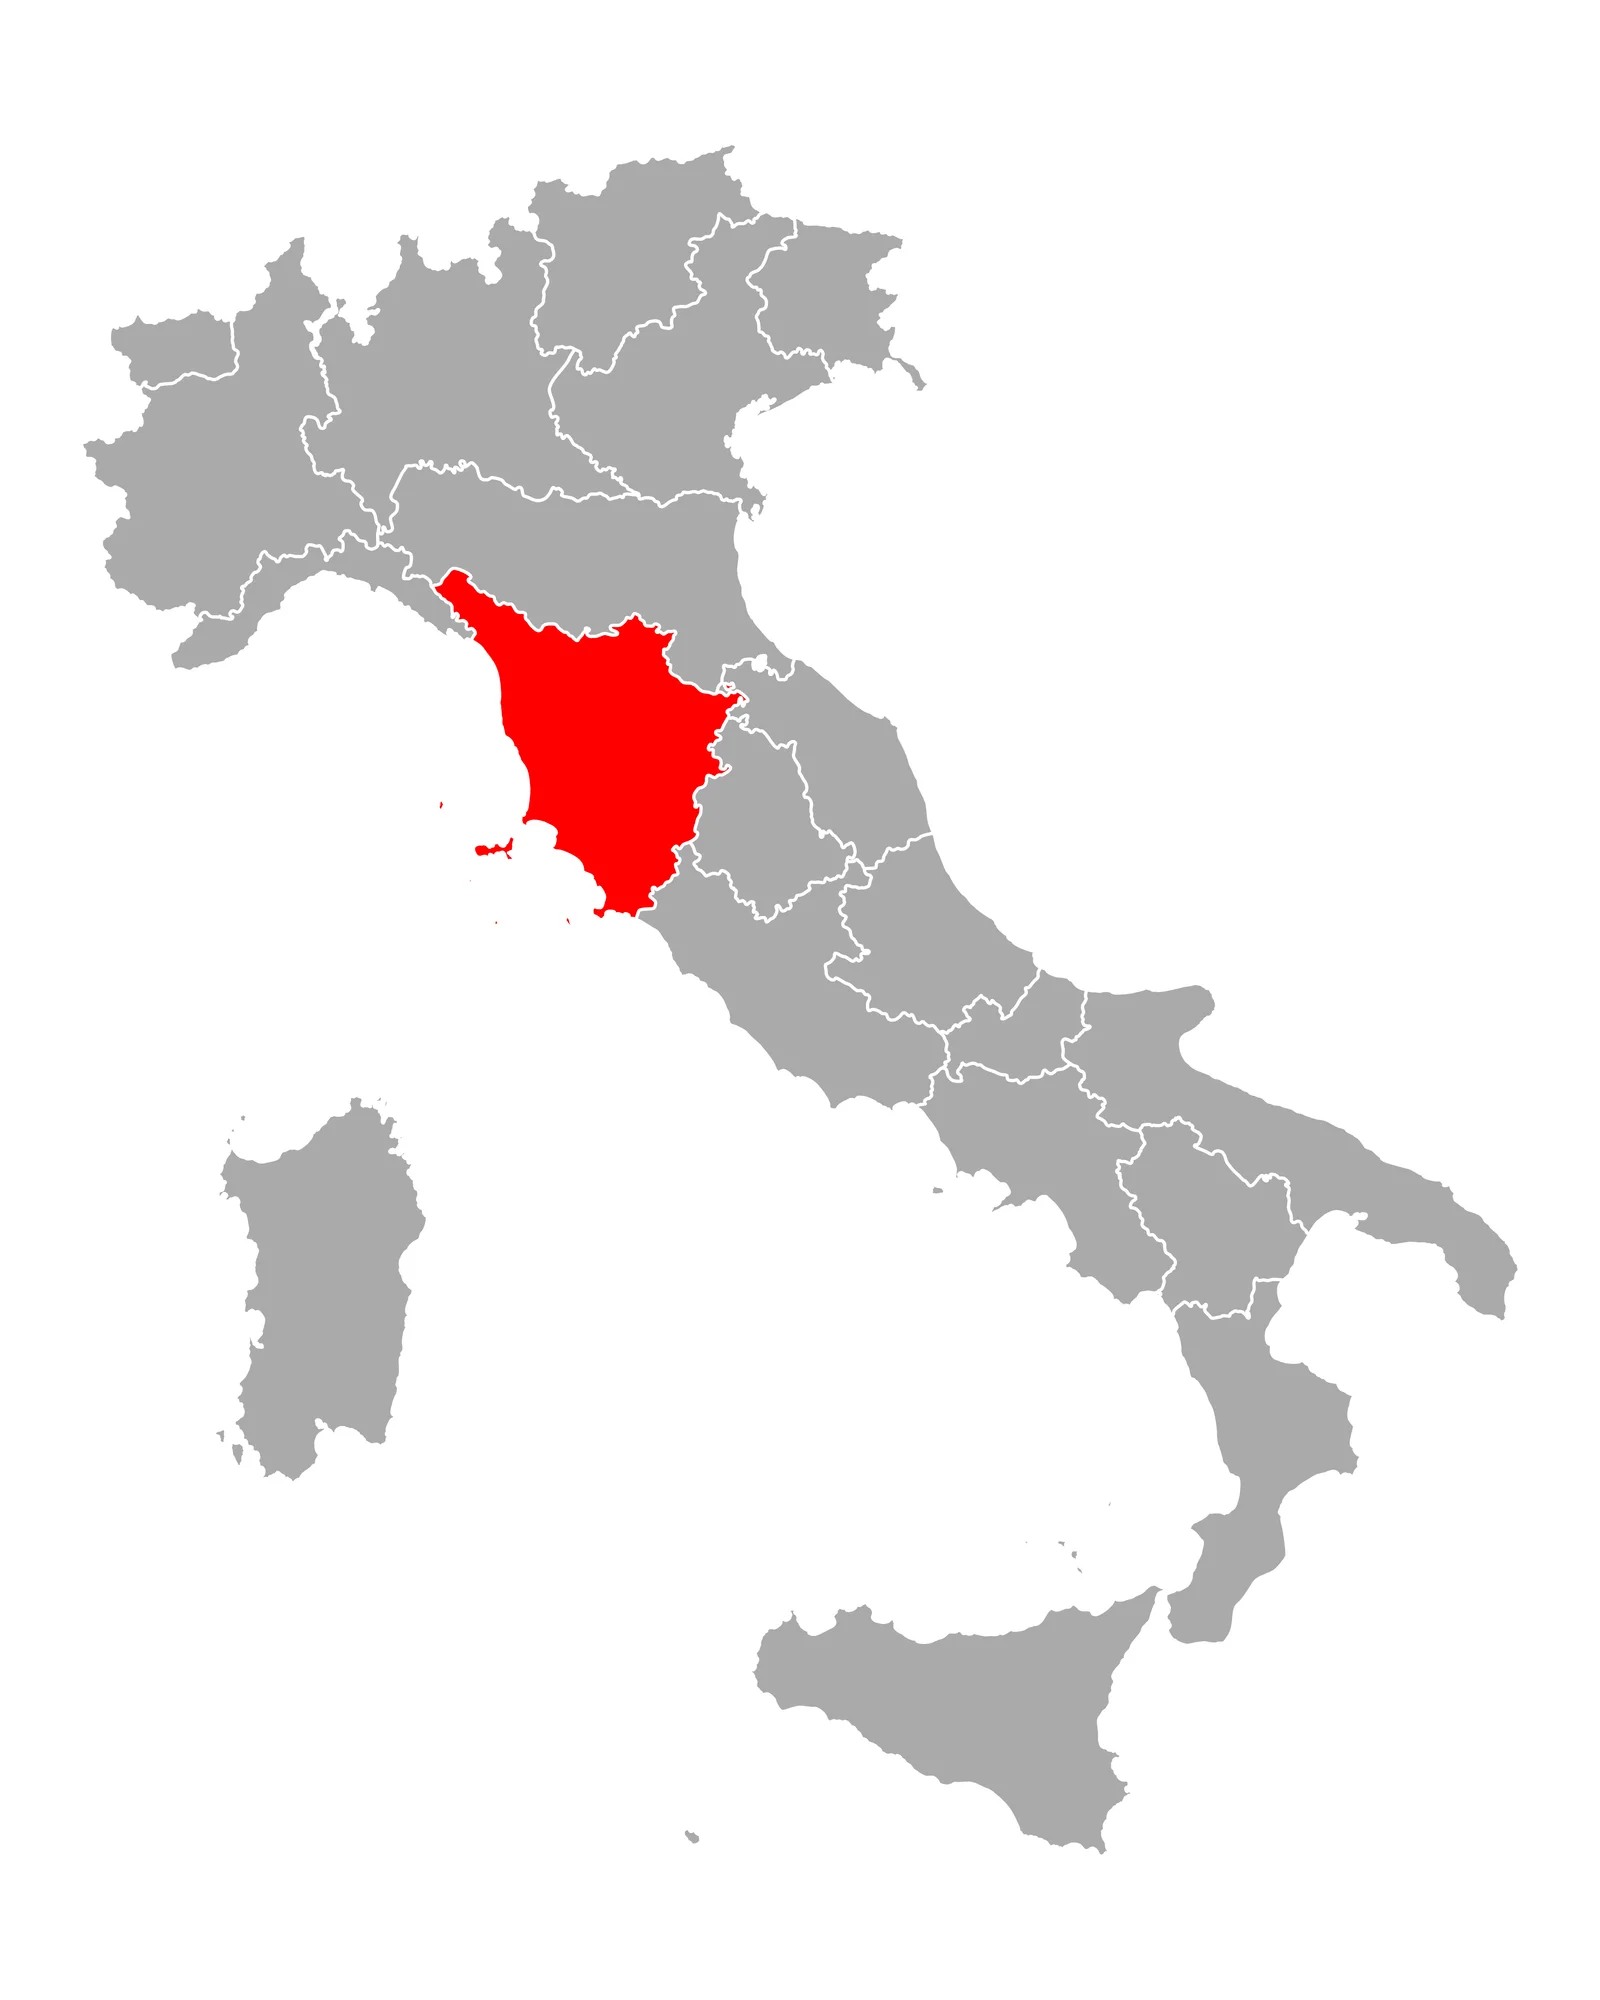 Map of Tuscany within Italy